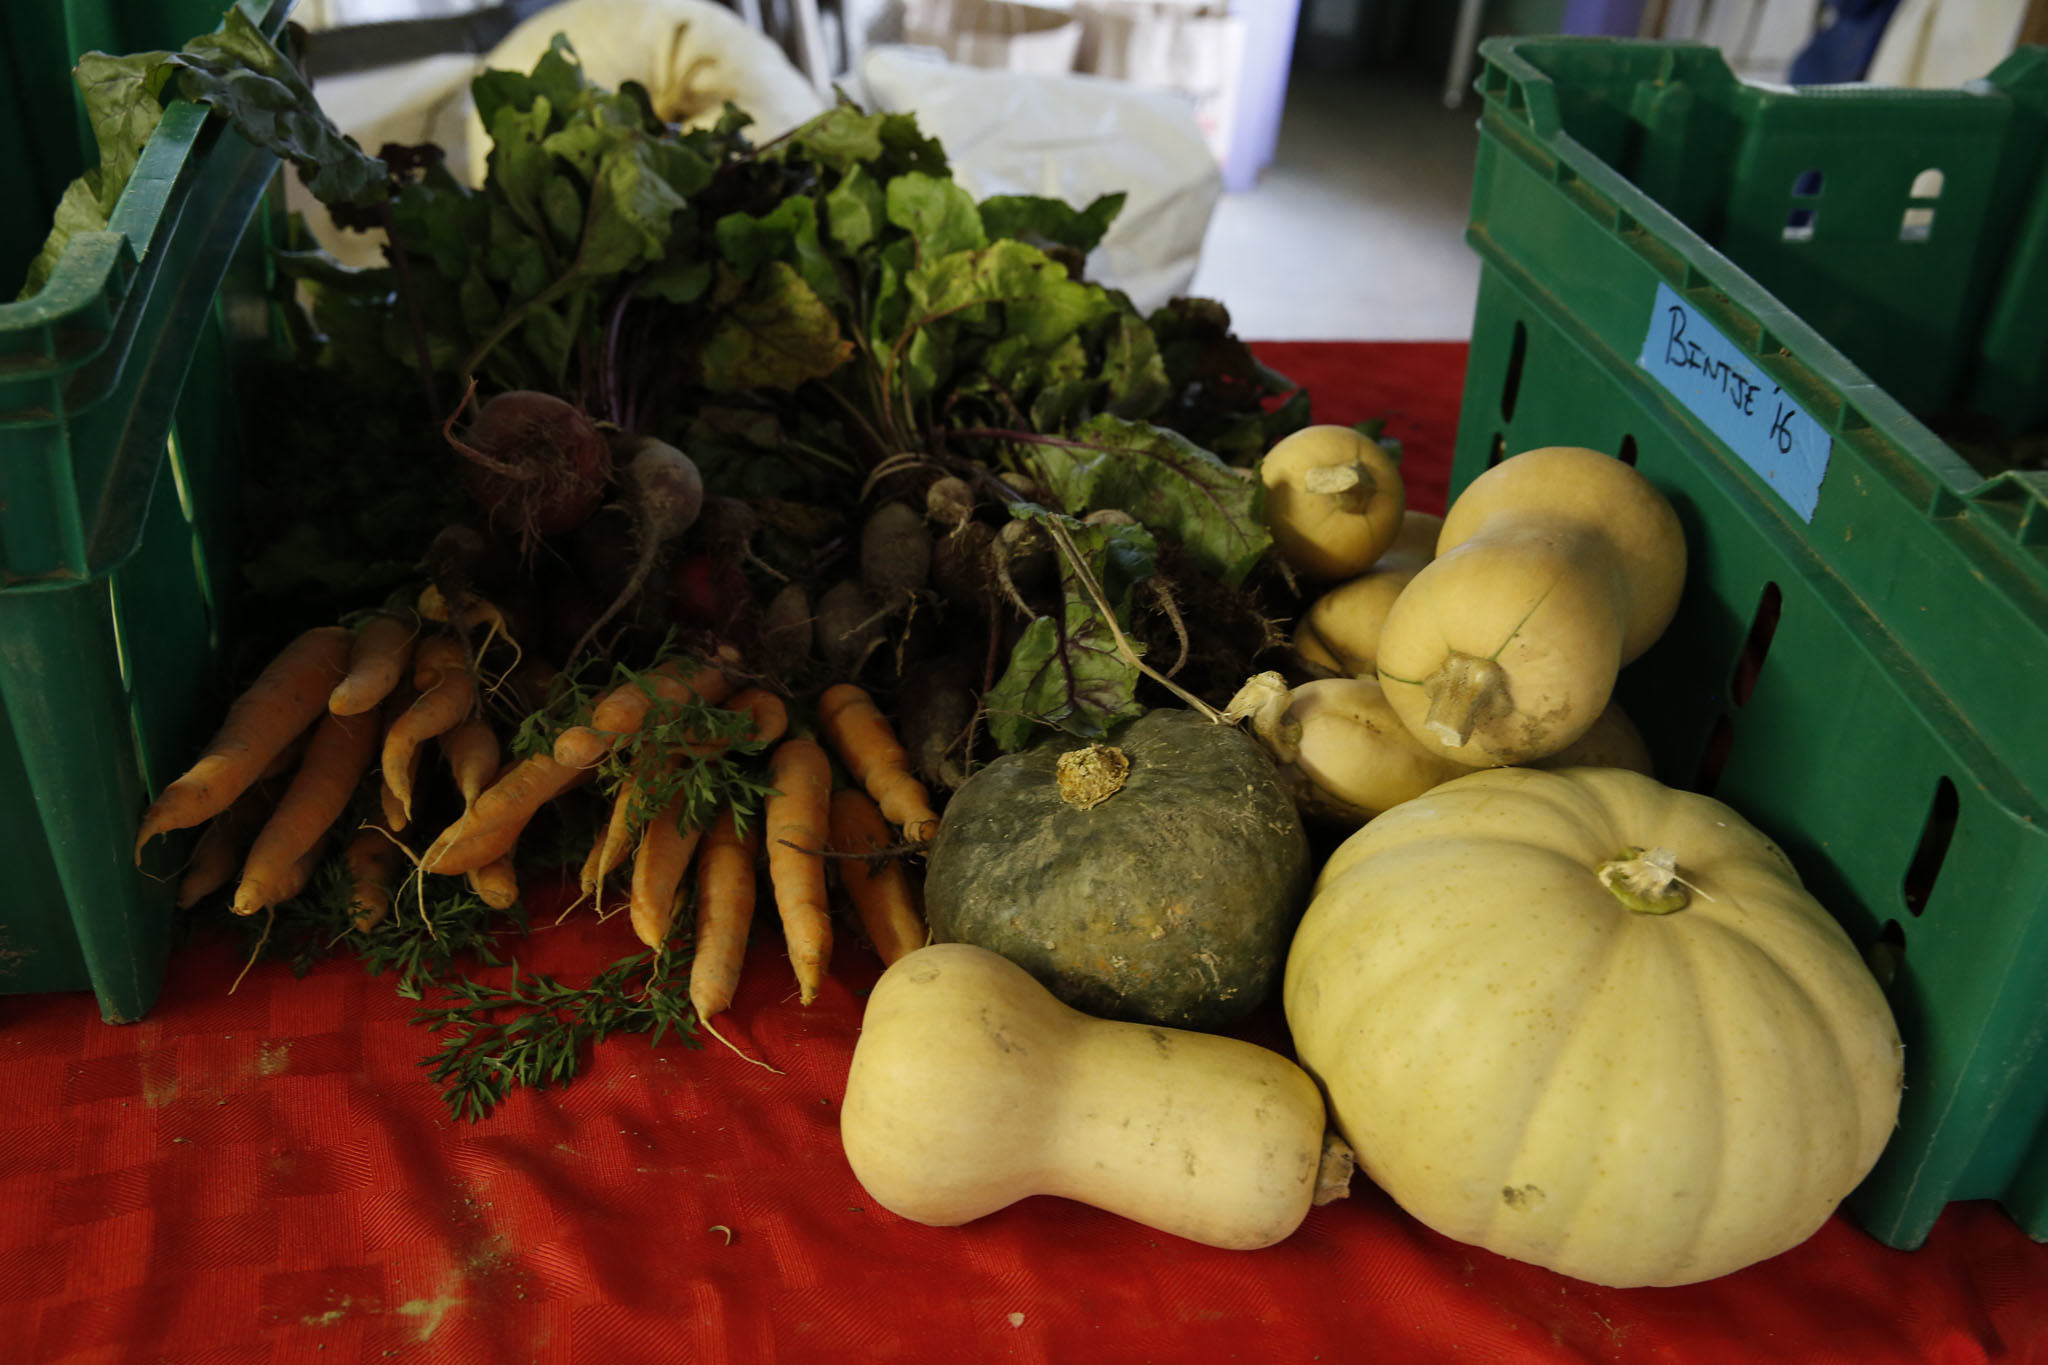 Autumn produce at Quail Hill Farm including carrots and squash